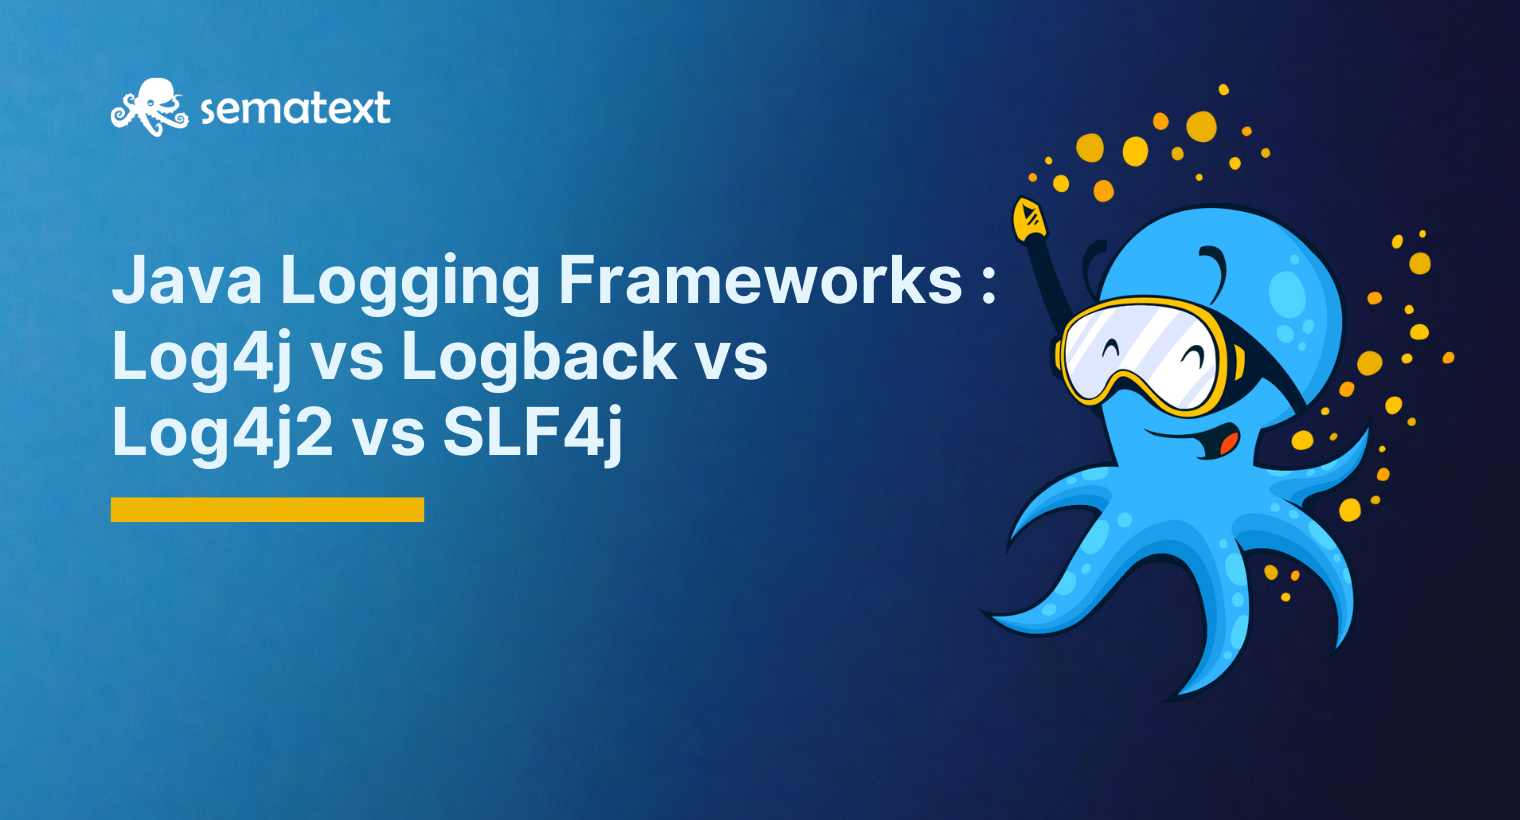 Java Logging Frameworks Comparison: Log4j vs Logback vs Log4j2 vs SLF4j Differences